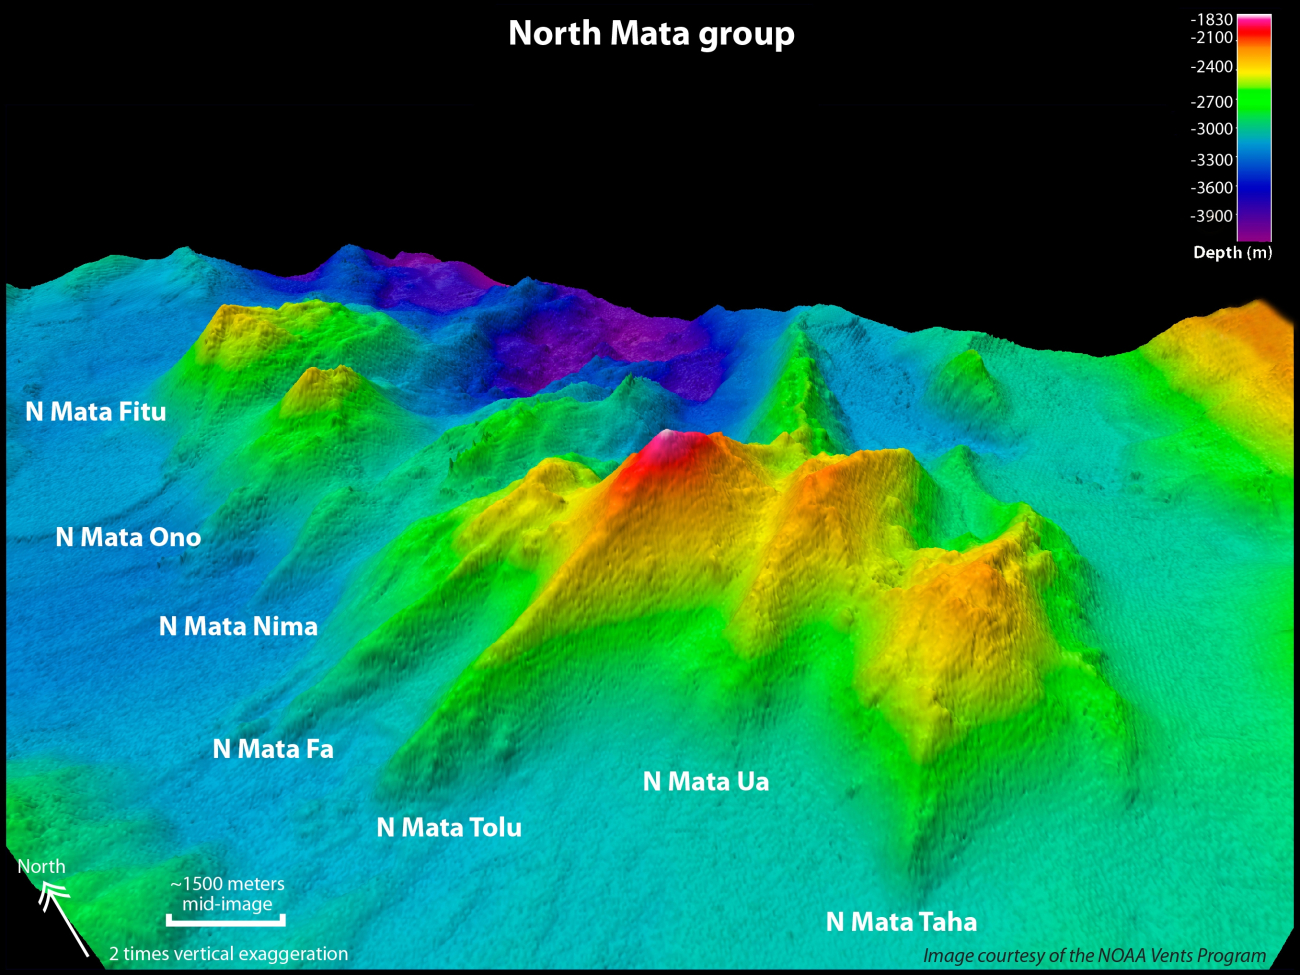 The North Mata Group of seamounts